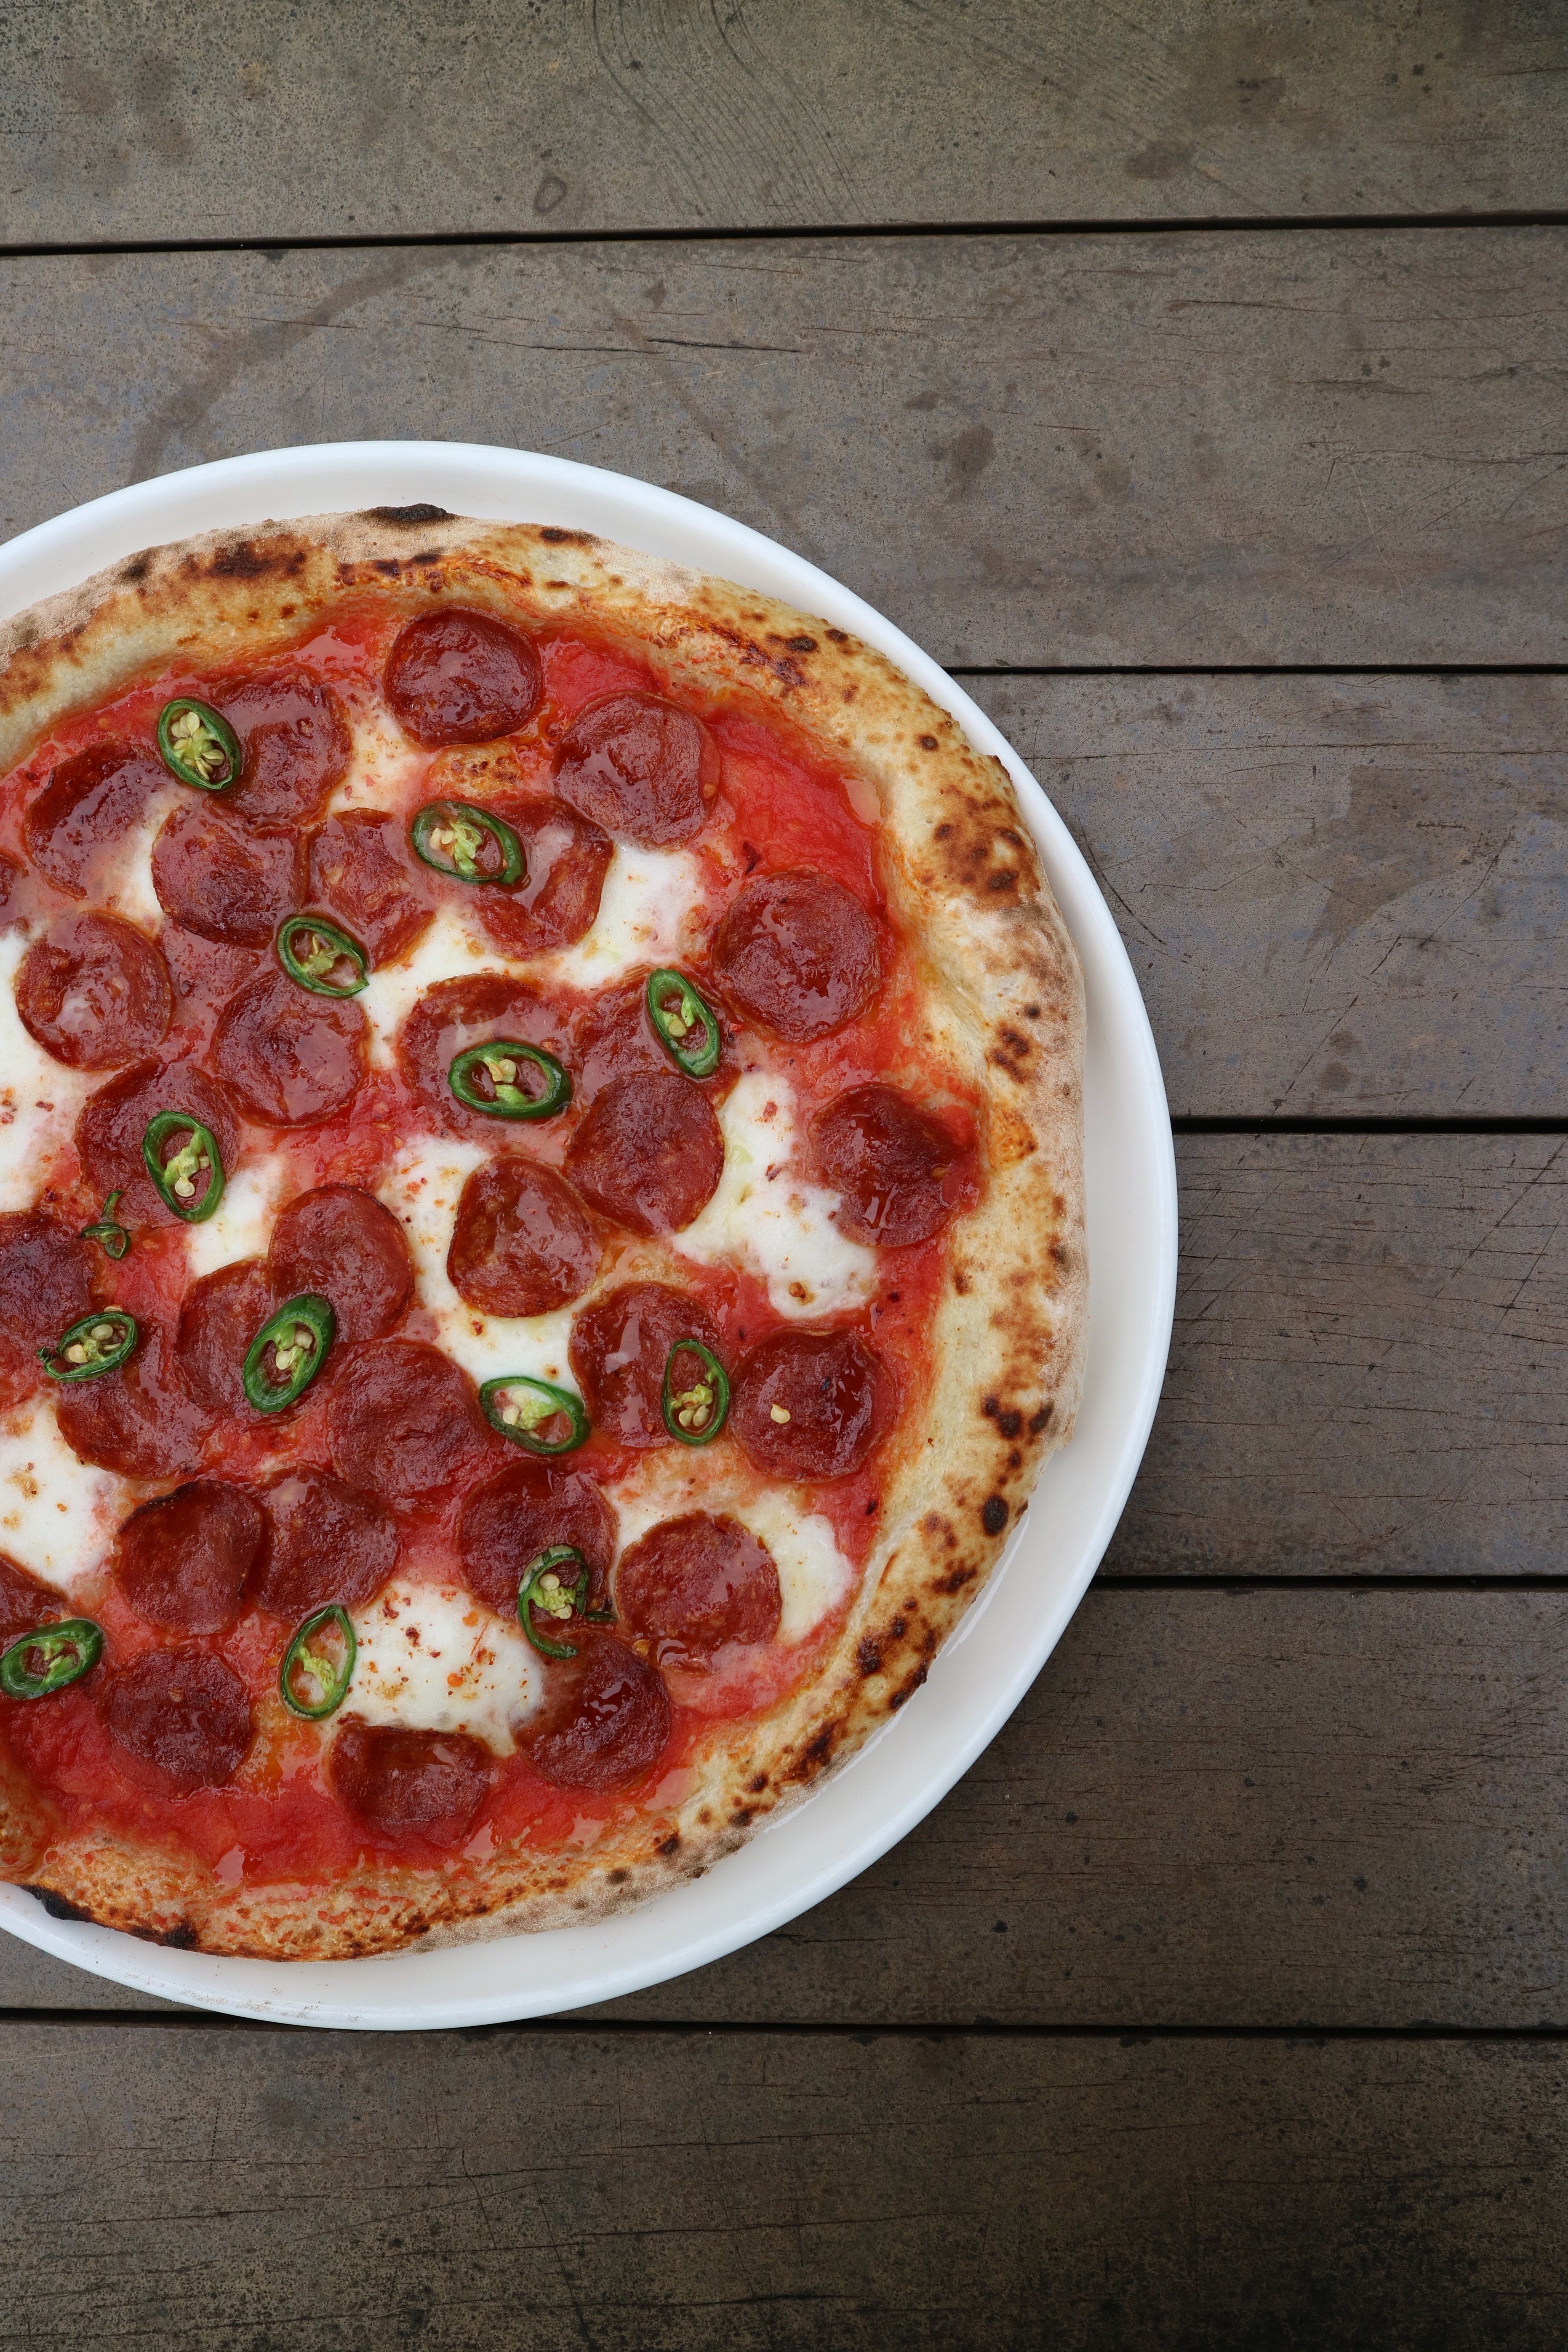 January's Special - Spicy Pizza Diavola